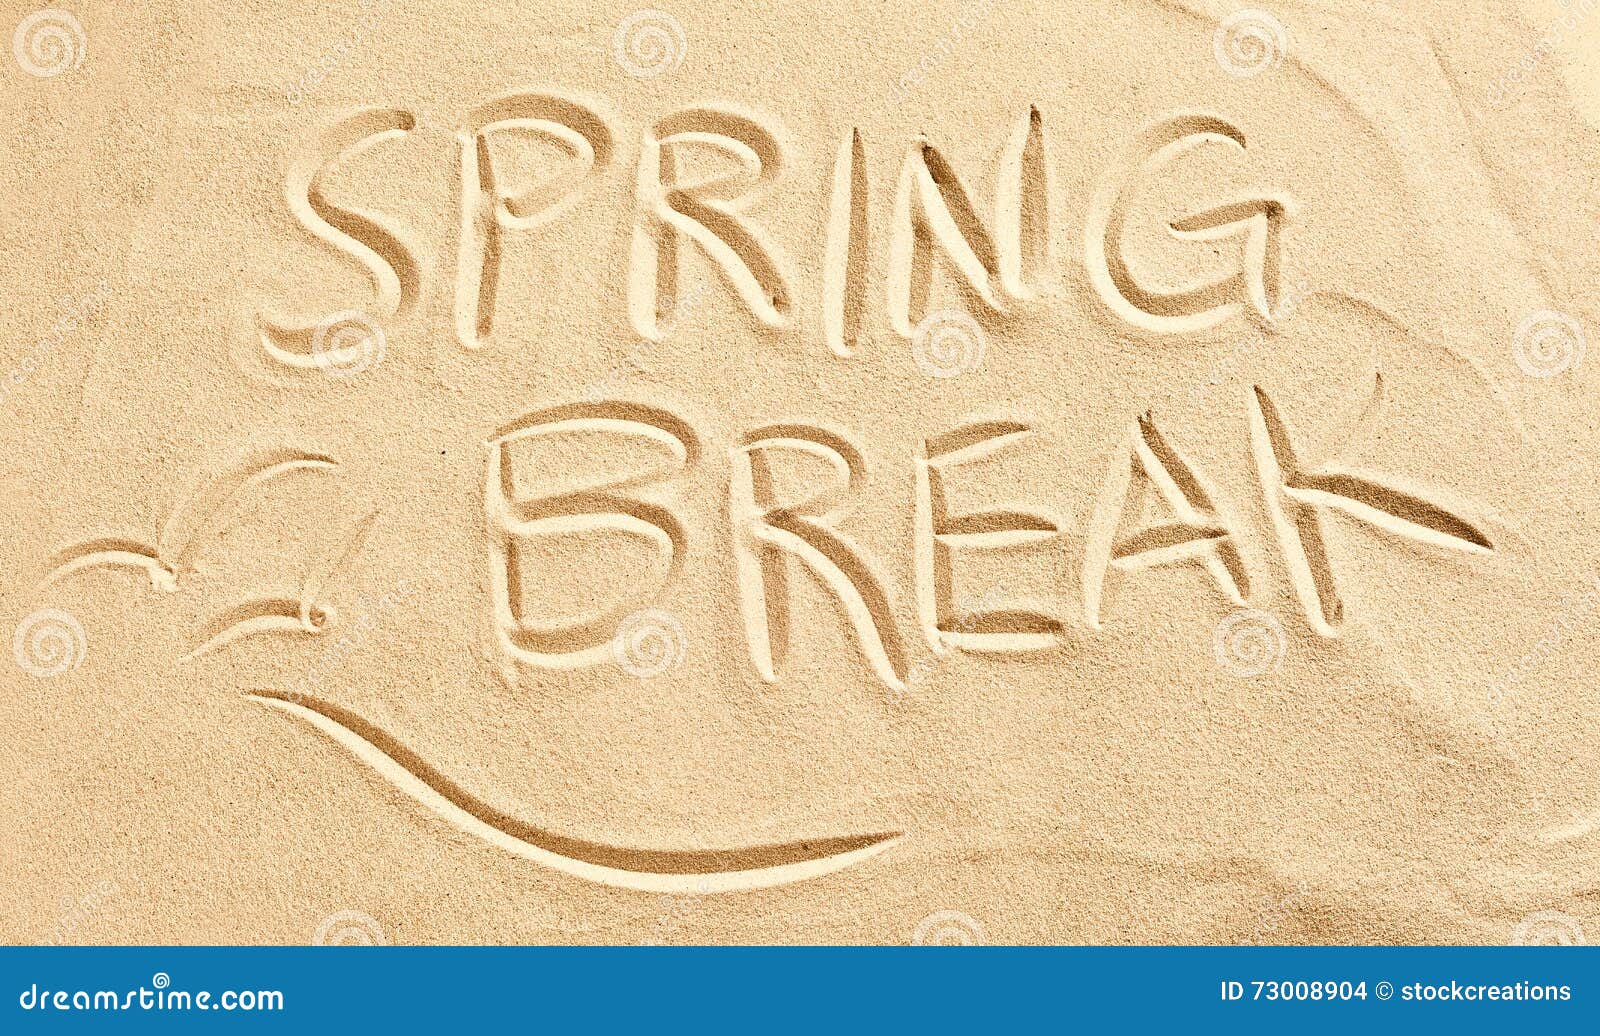 spring break and seagulls drawn in beach sand